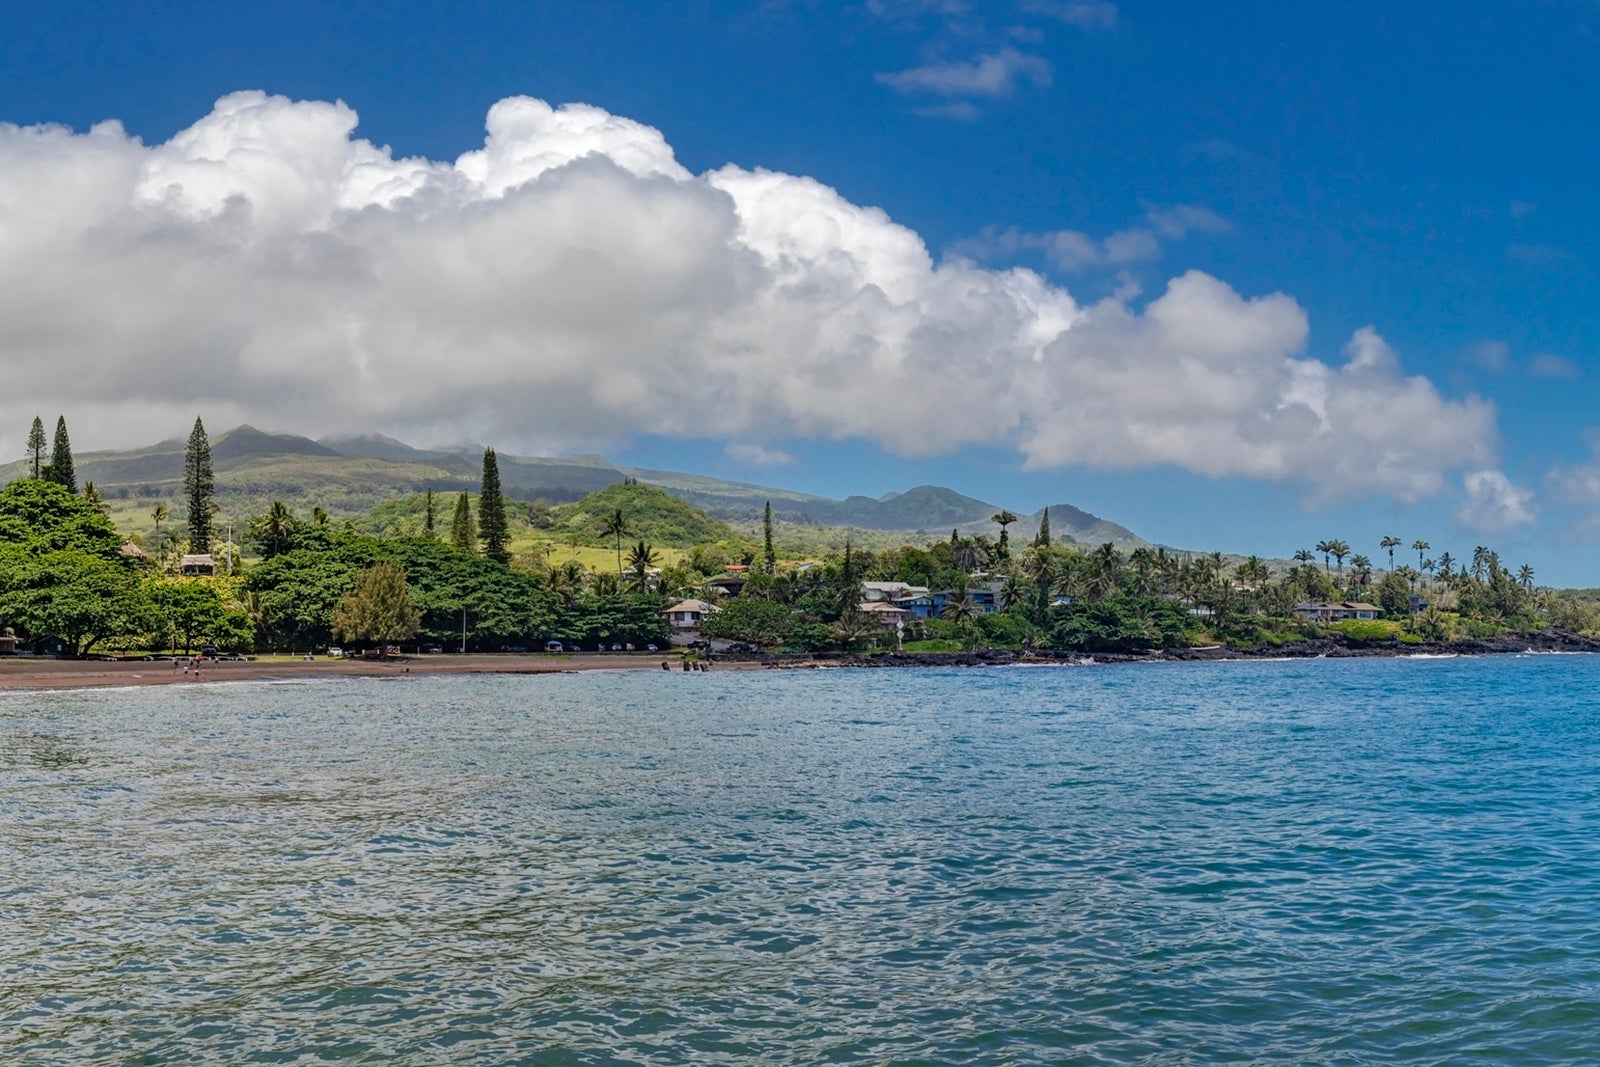 Hana Bay and hills of the township of Hana, Maui. 